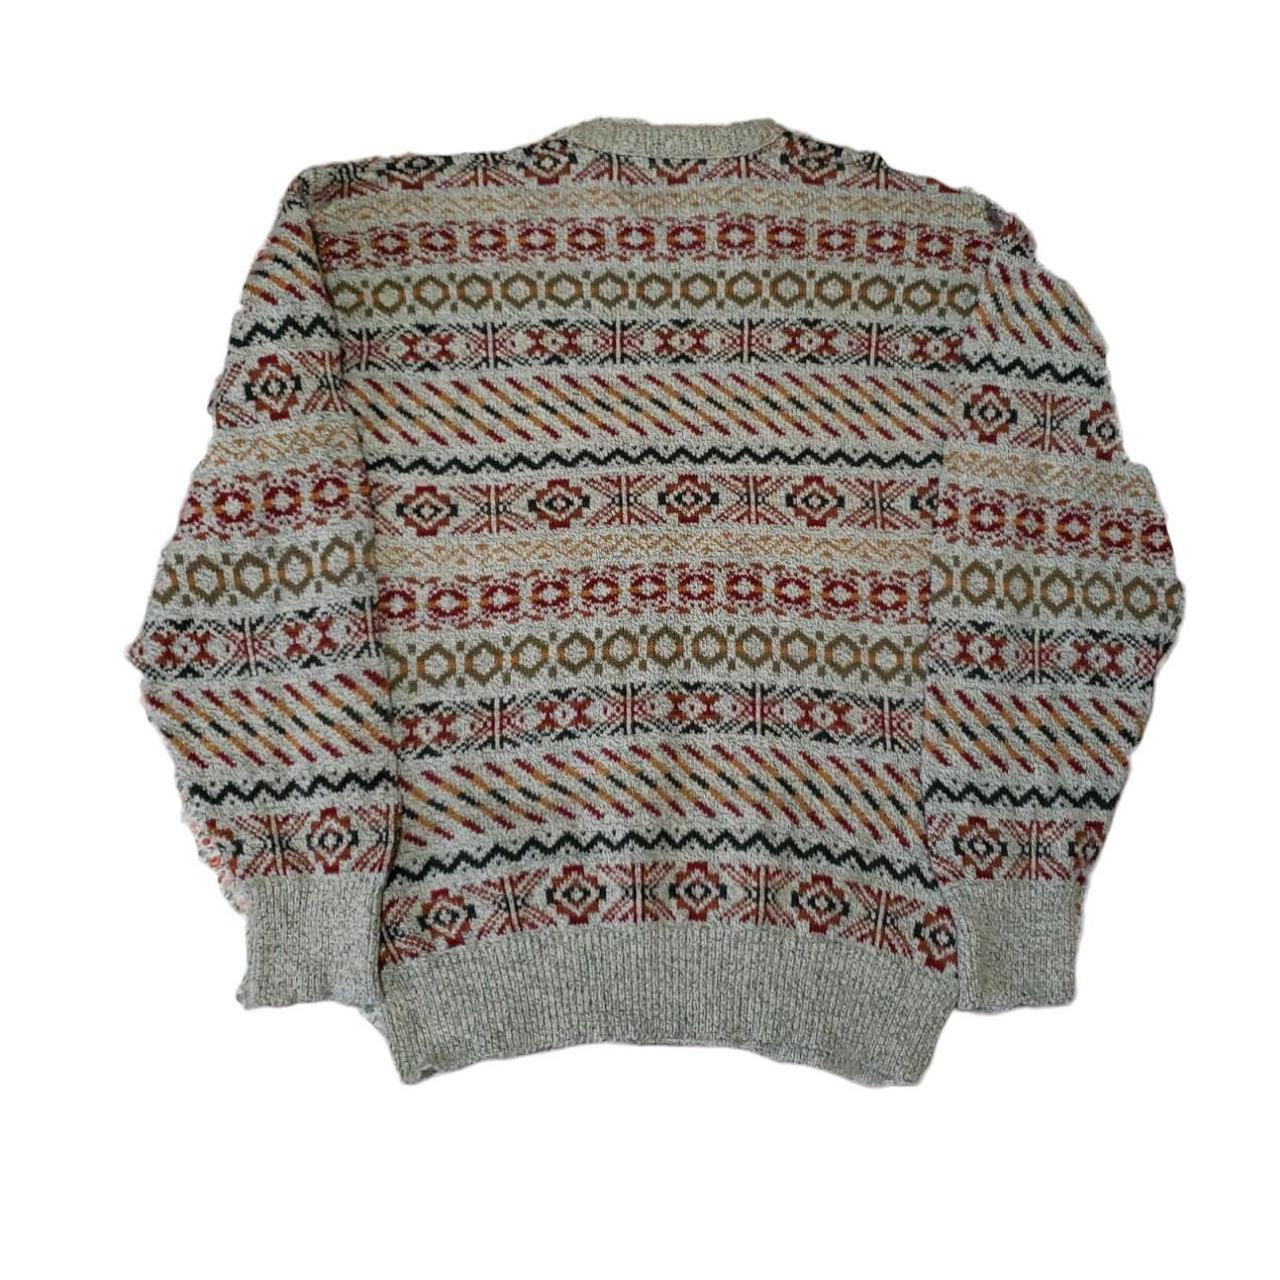 Vintage colorful fair isle knit sweater Earthy... - Depop